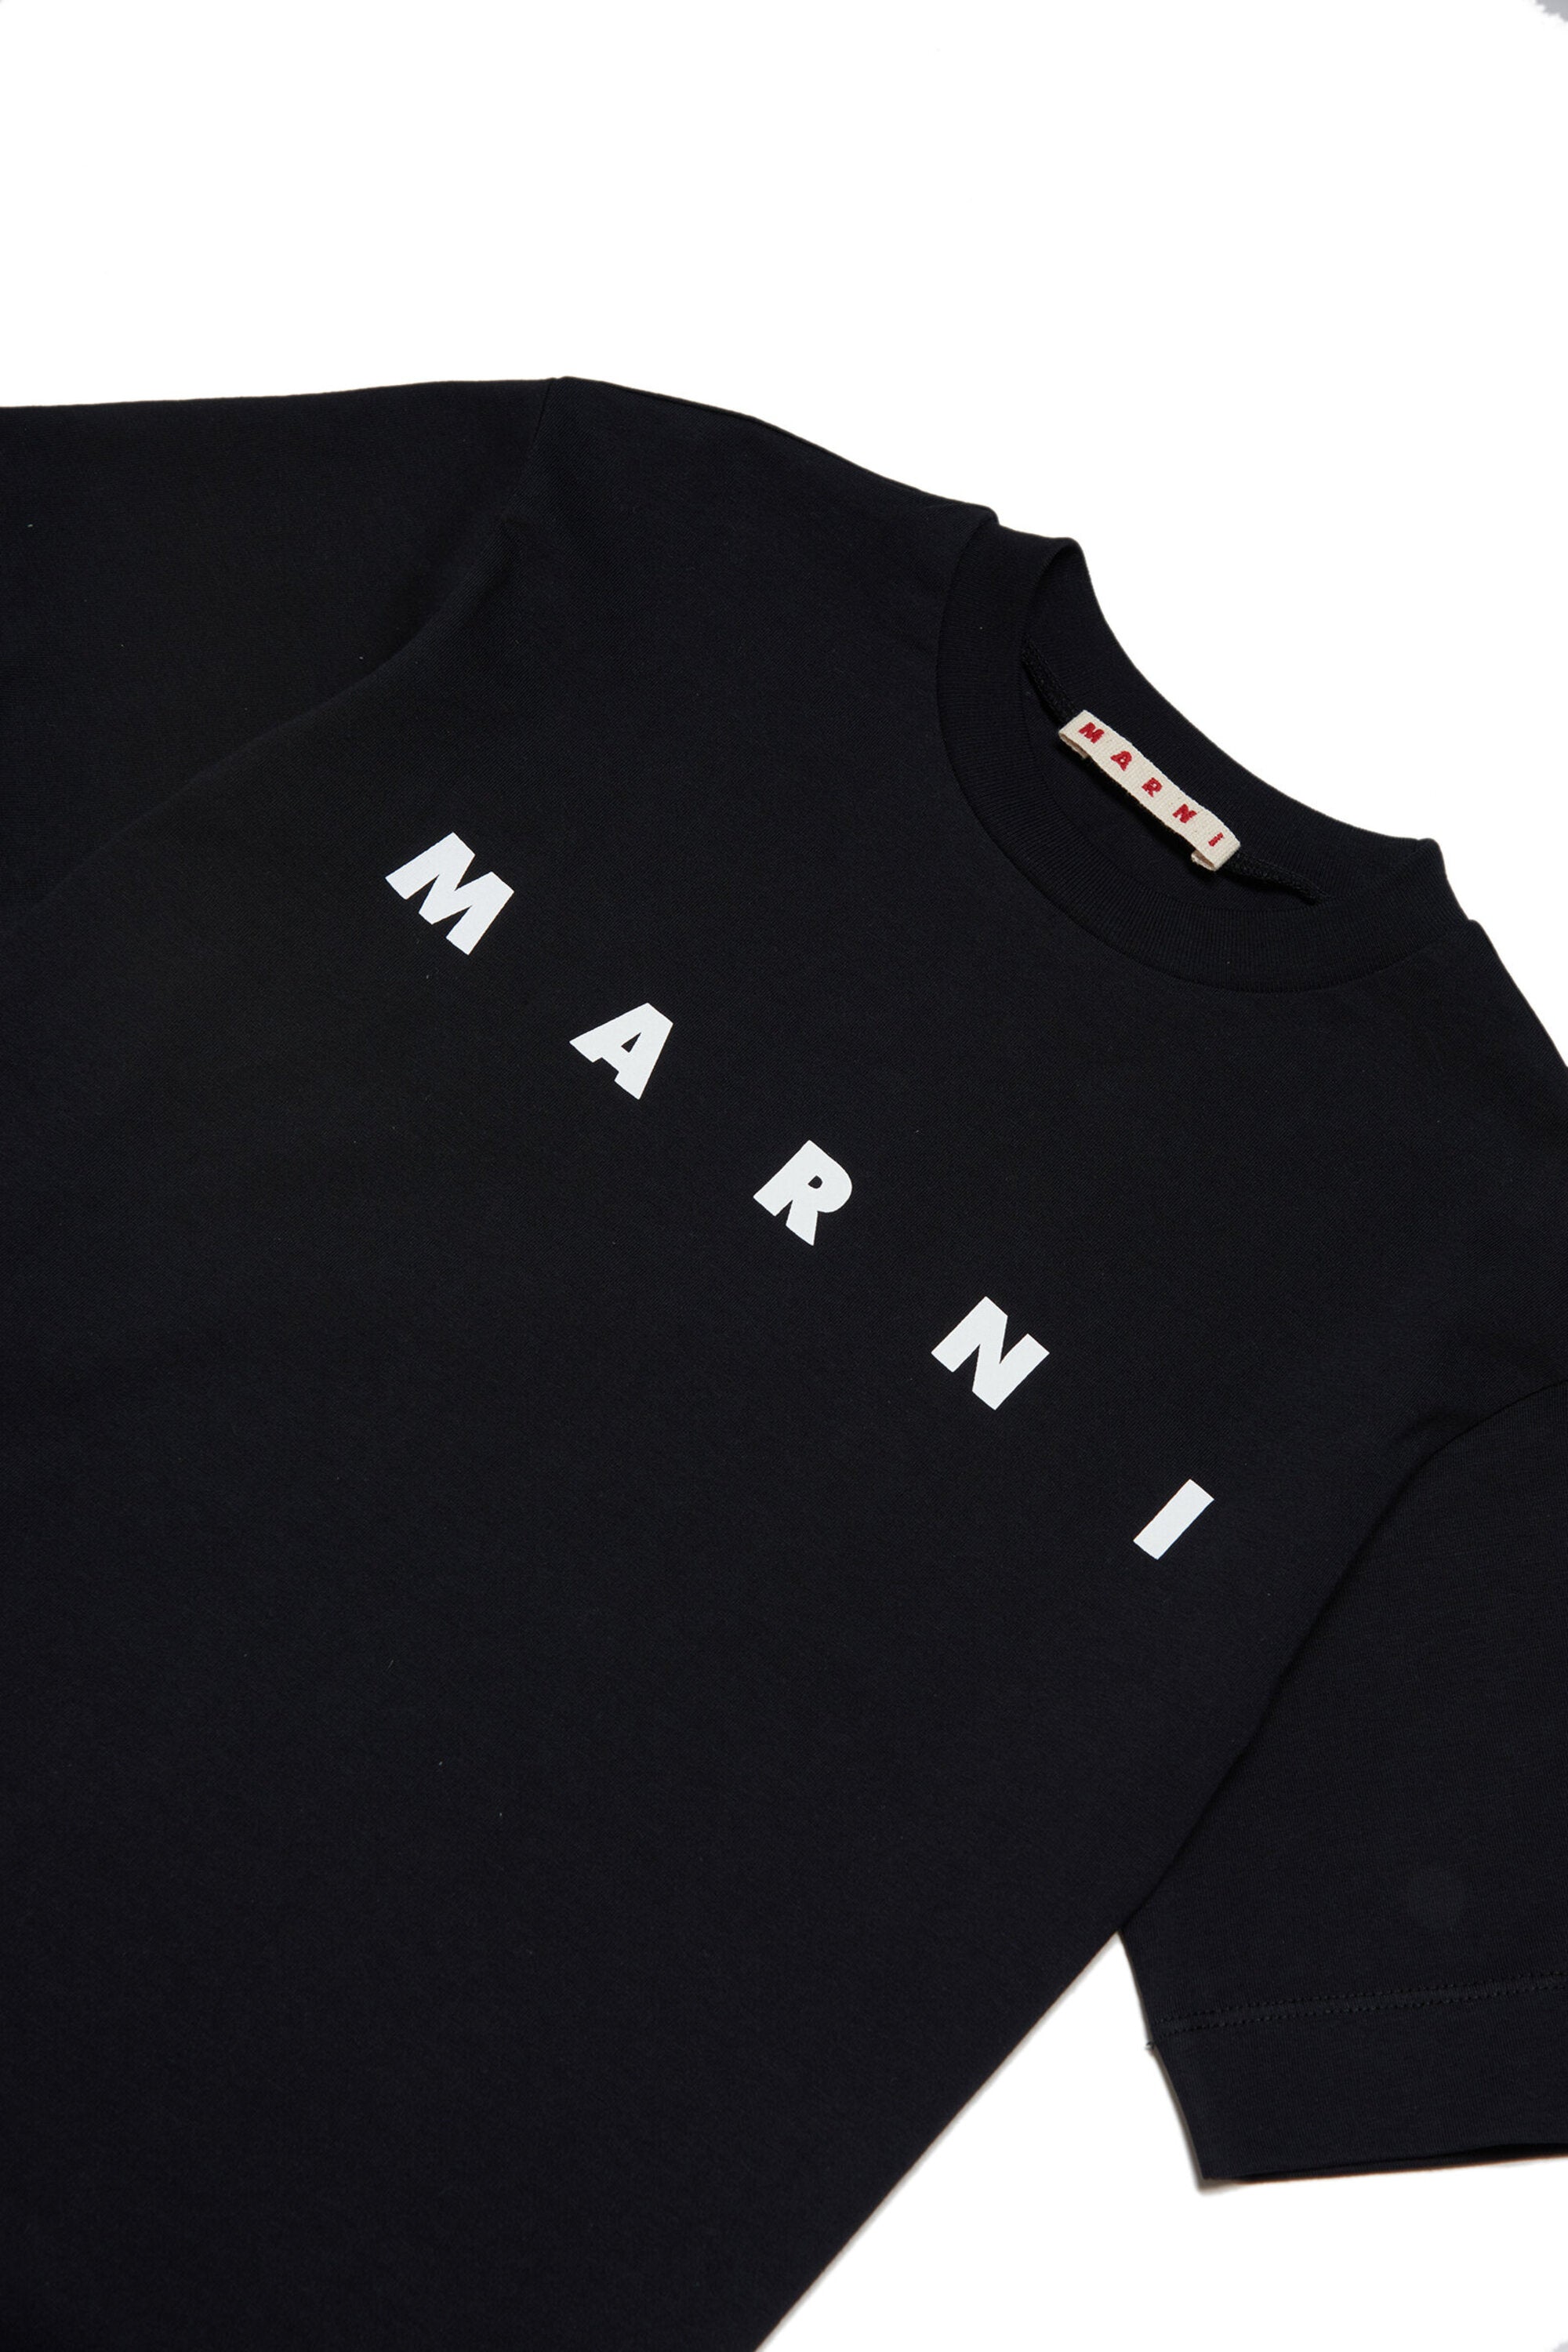 Marni black jersey t-shirt with logo for children | Brave Kid